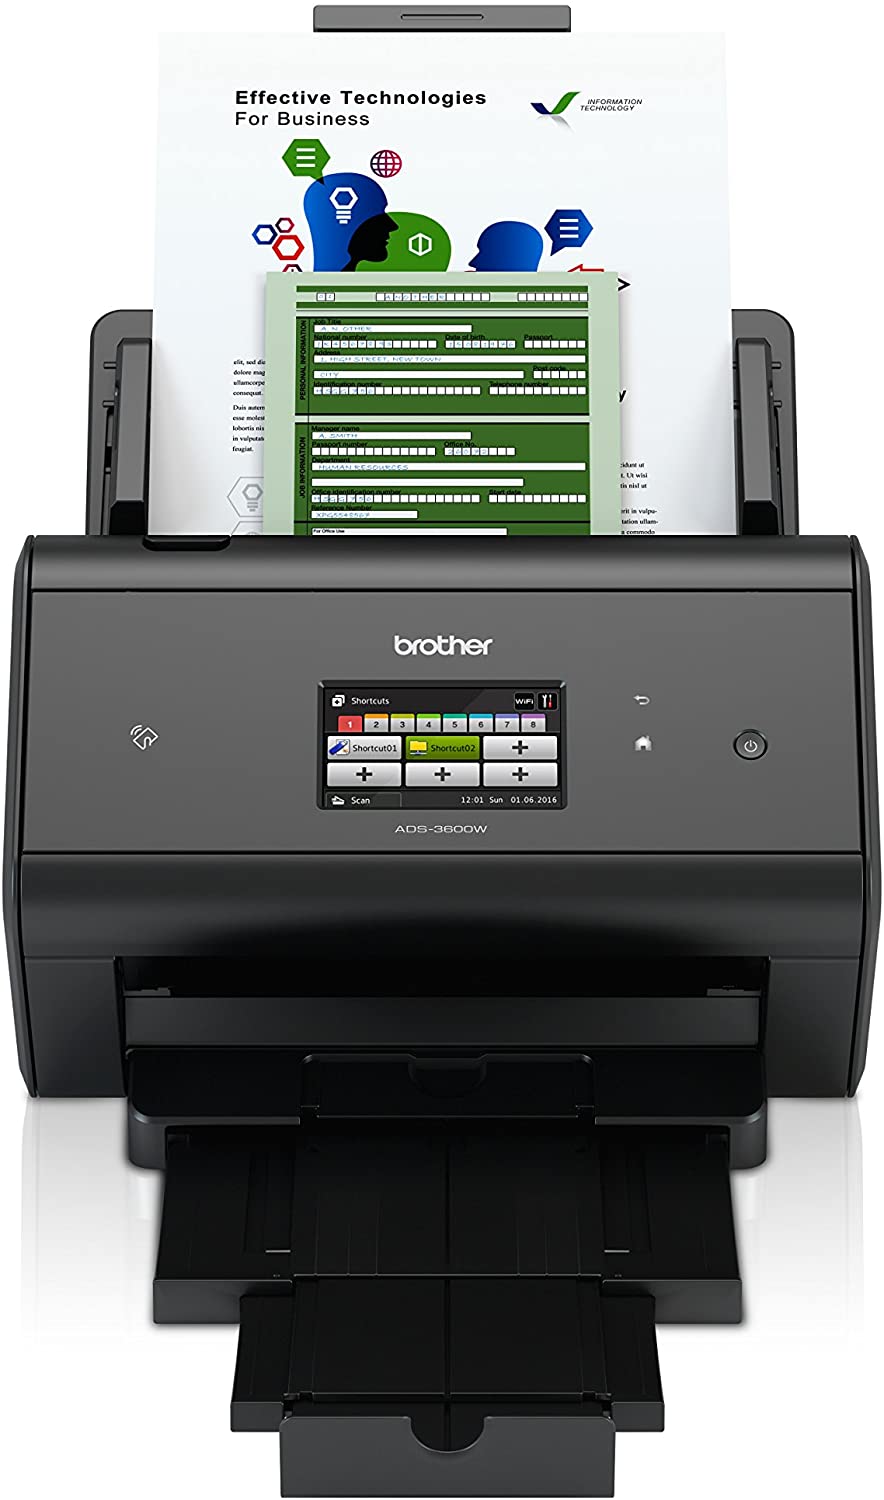 Brother ADS3600W Escaner Documental WiFi, NFC - Hasta 50ppm - Alimentador Automatico - Doble Cara